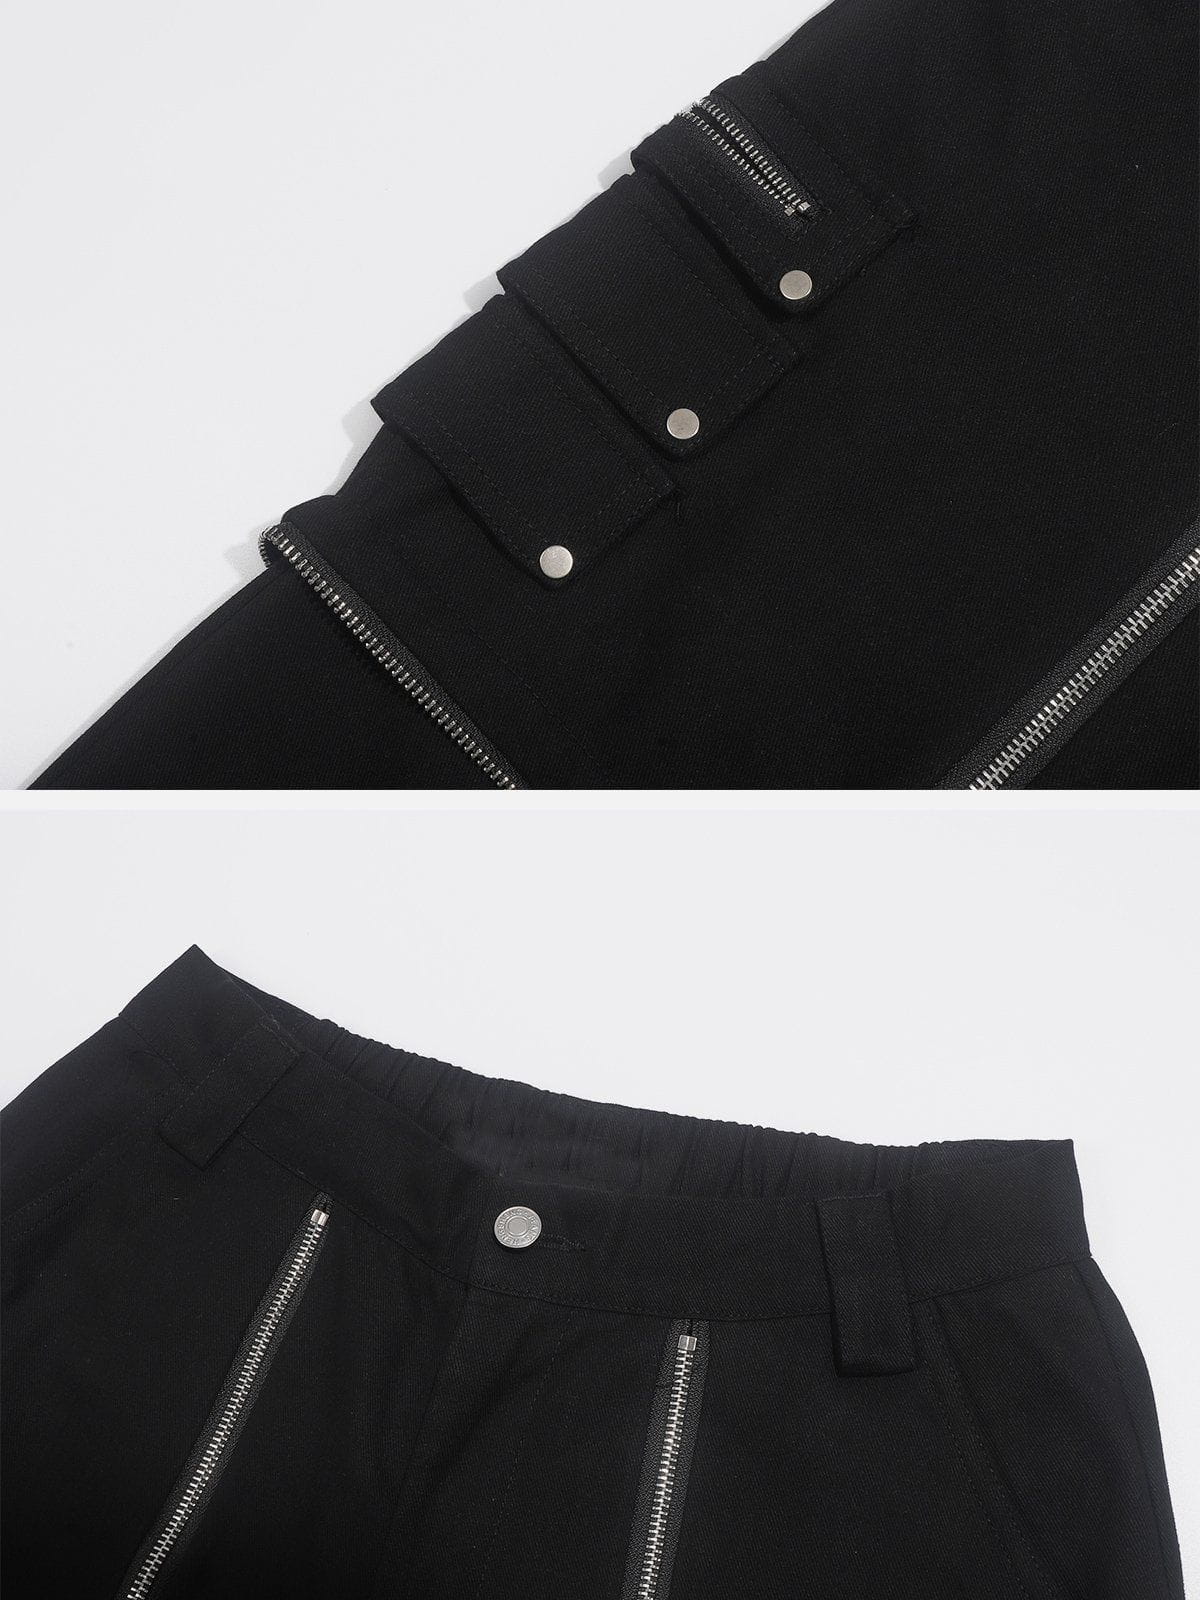 Majesda® - Zipper Design Loose Pants outfit ideas streetwear fashion